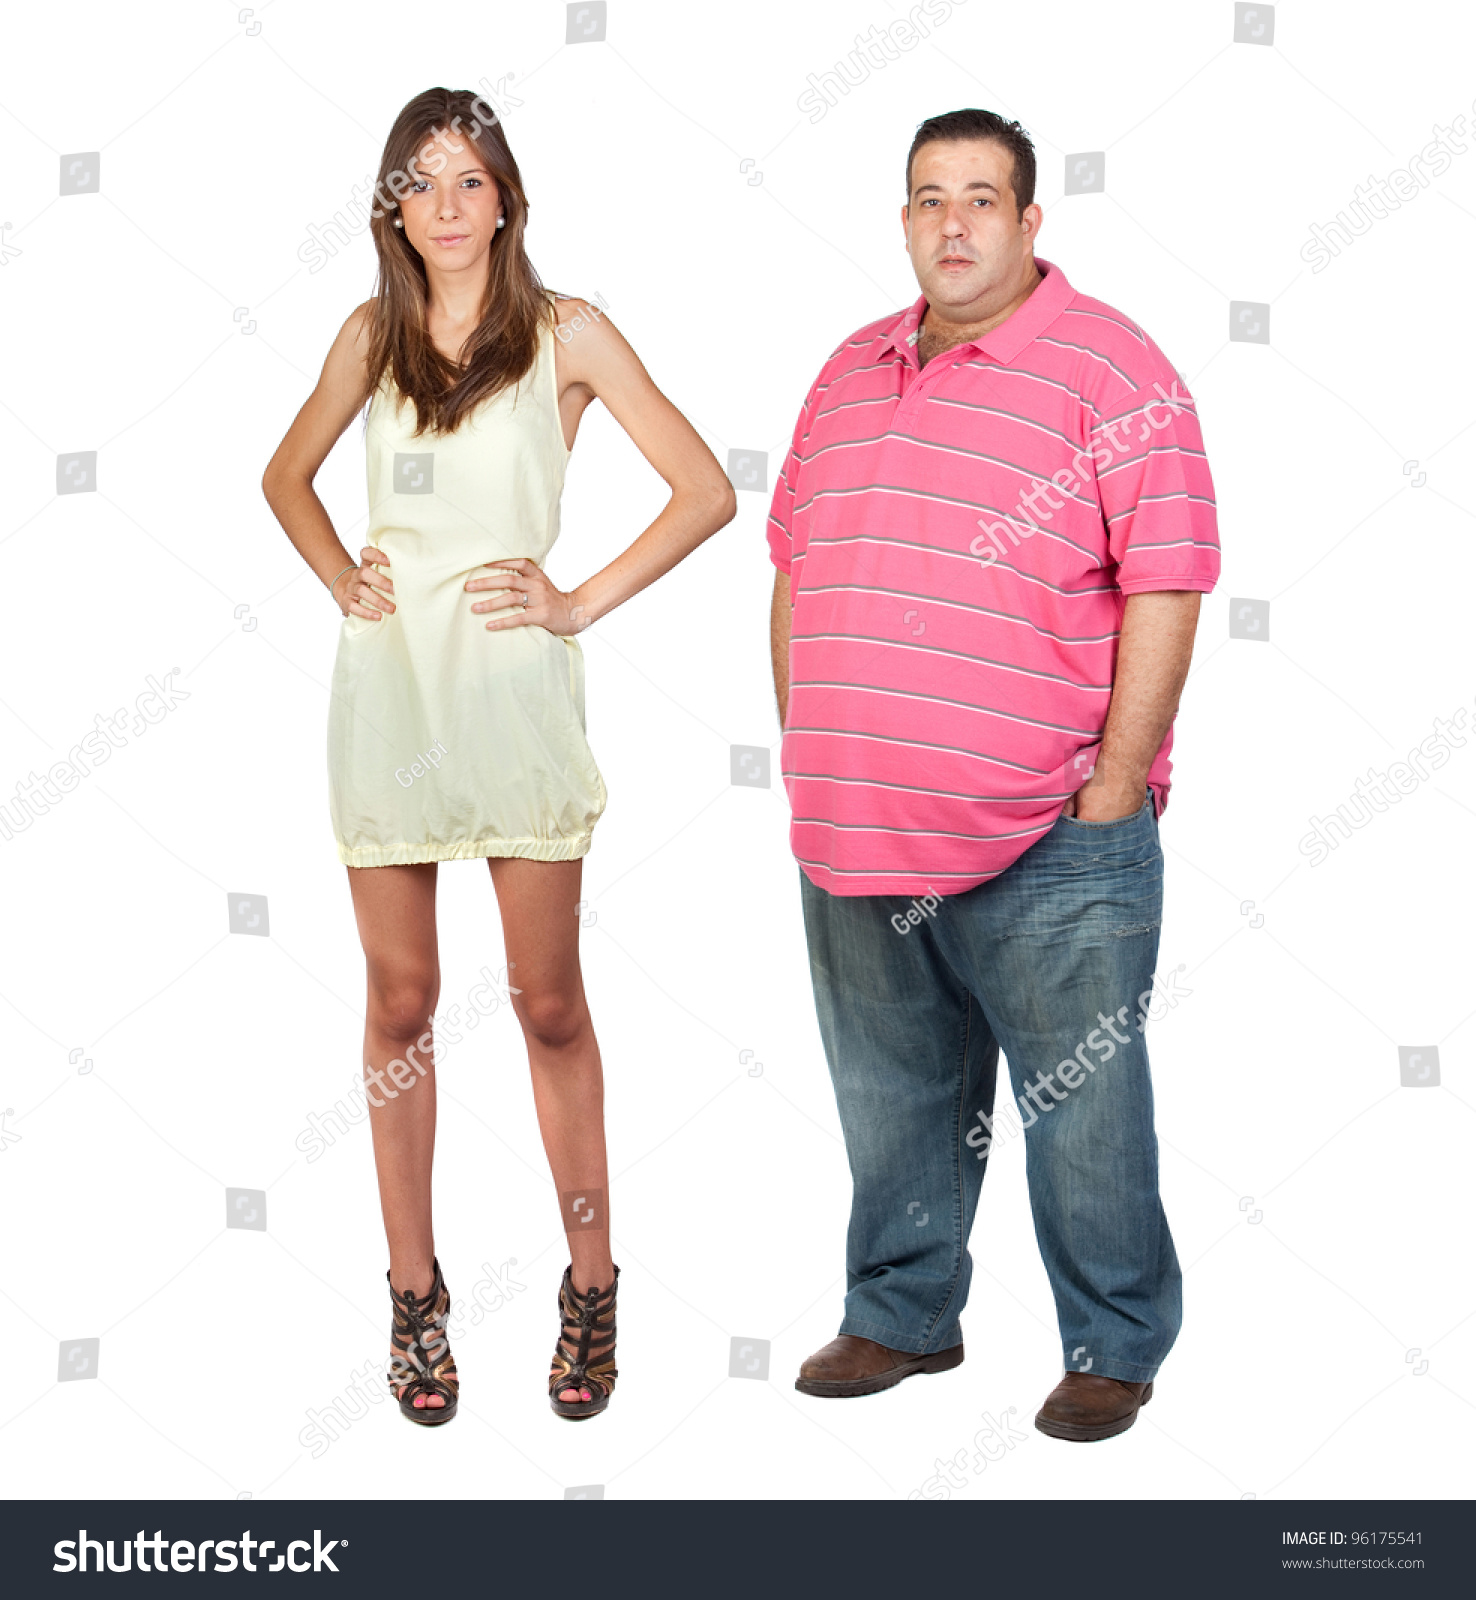 334 Fat Man Skinny Woman Images Stock Photos Vectors Shutterstock